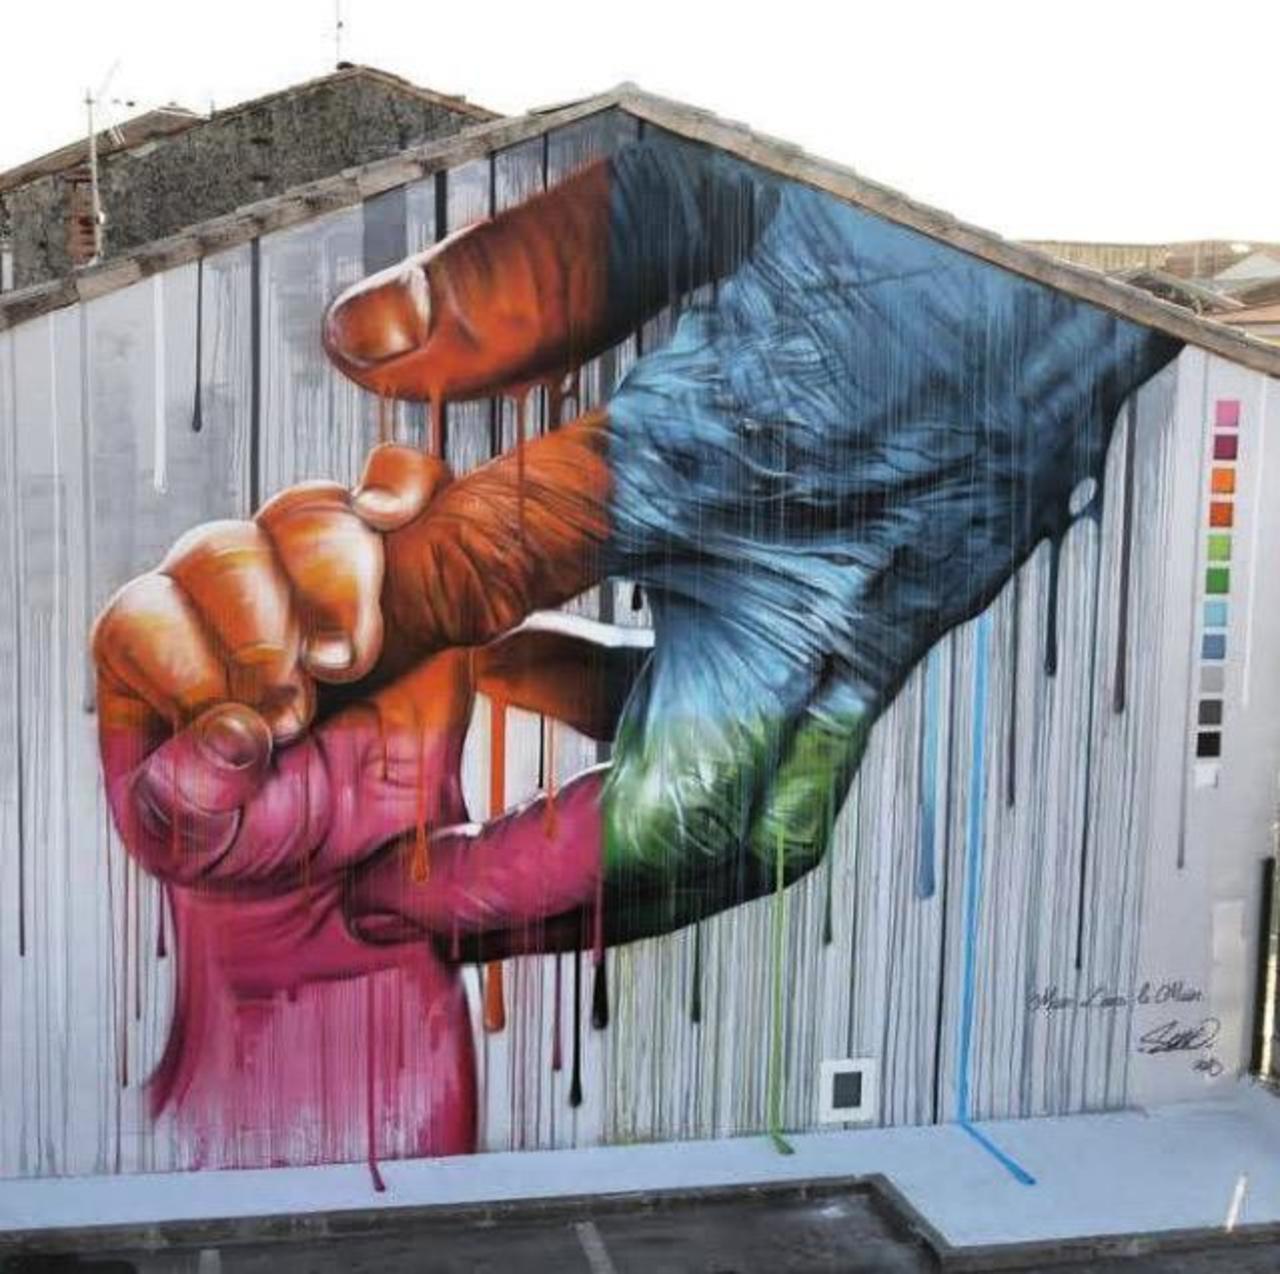 Seno Street Art 

#art #graffiti #mural #streetart http://t.co/XTR84ZF60G